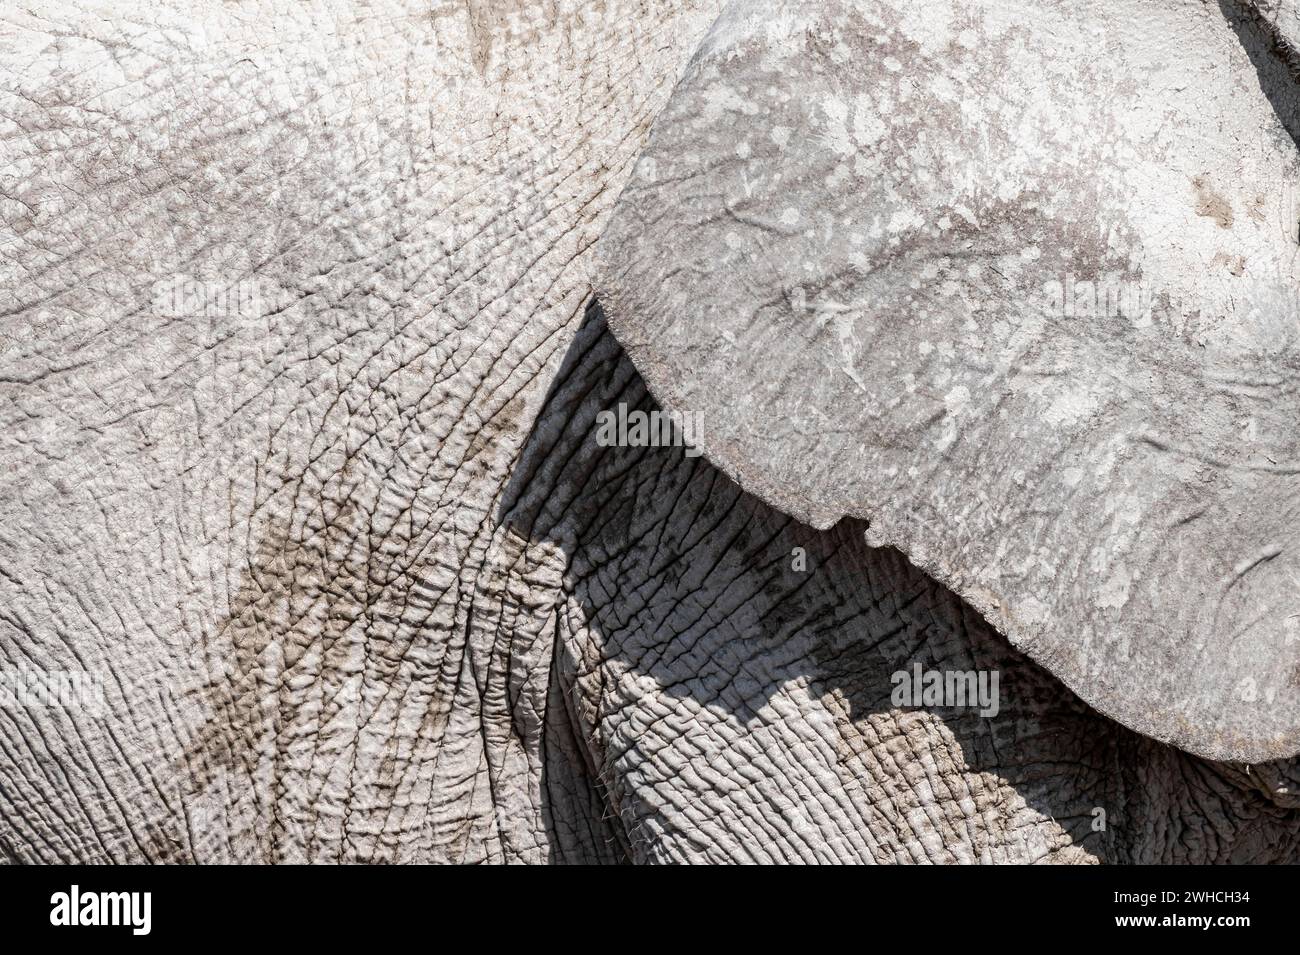 Afrikanischer Elefant (Loxodonta africana), Detail, Ohr und faltige Haut, Etosha Nationalpark, Namibia Stockfoto